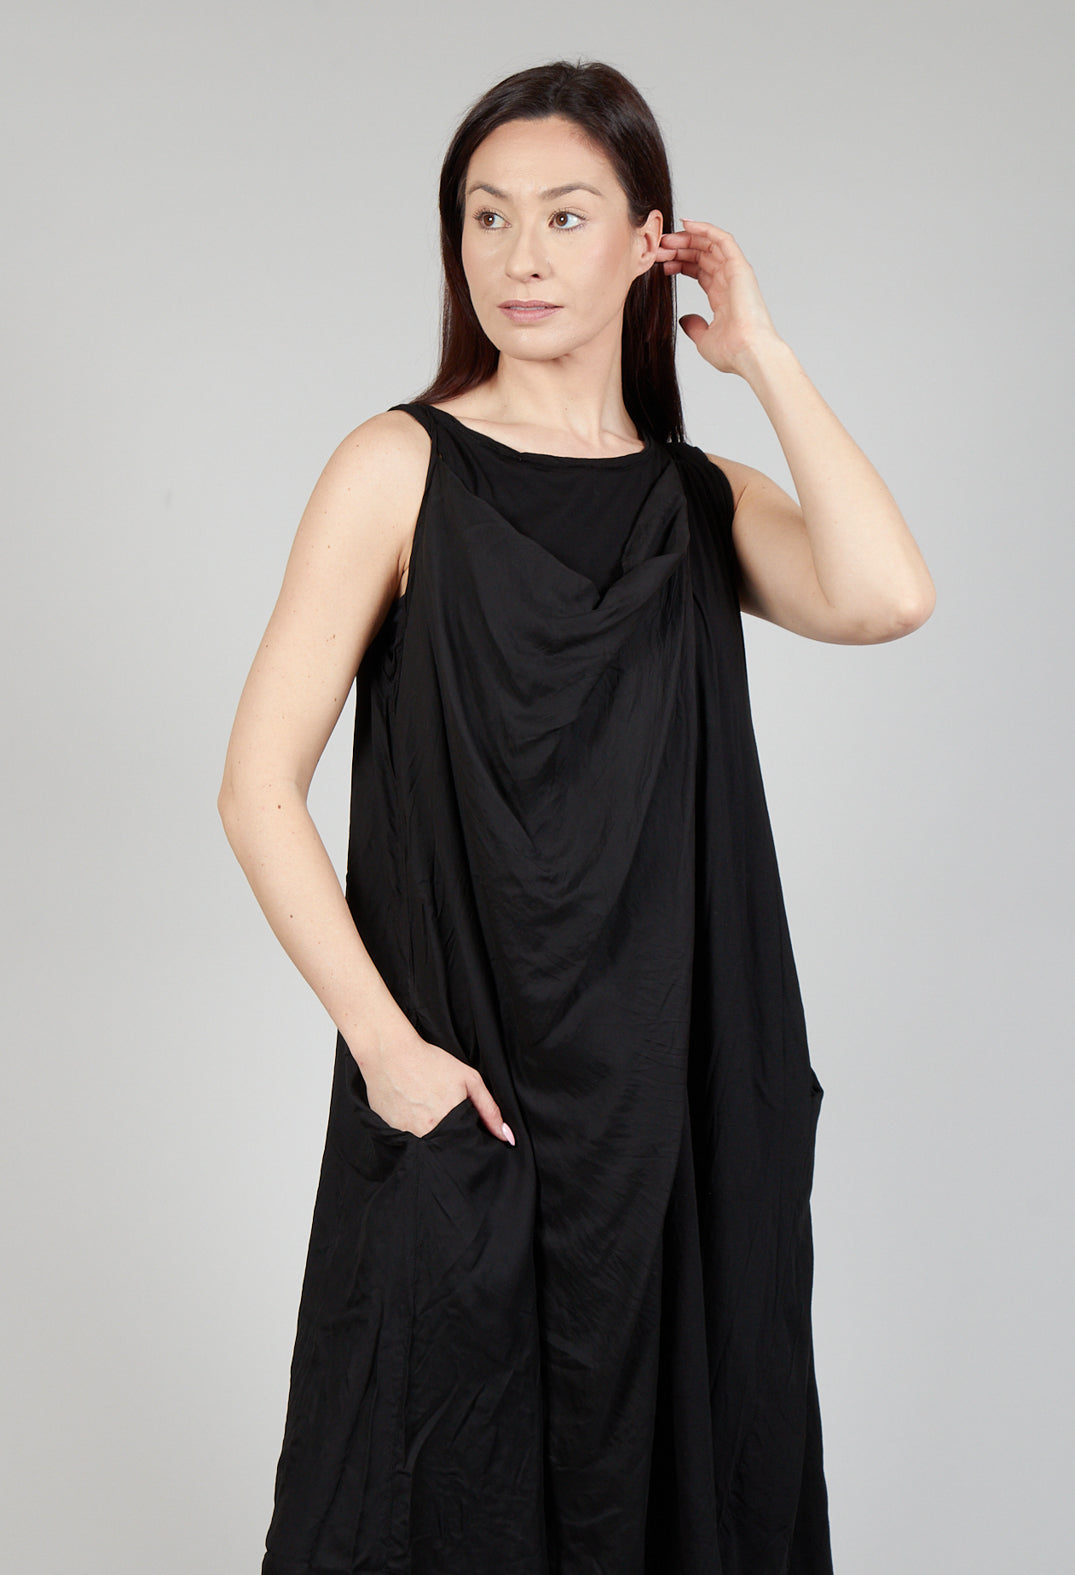 Cowl Neckline Dress in Black